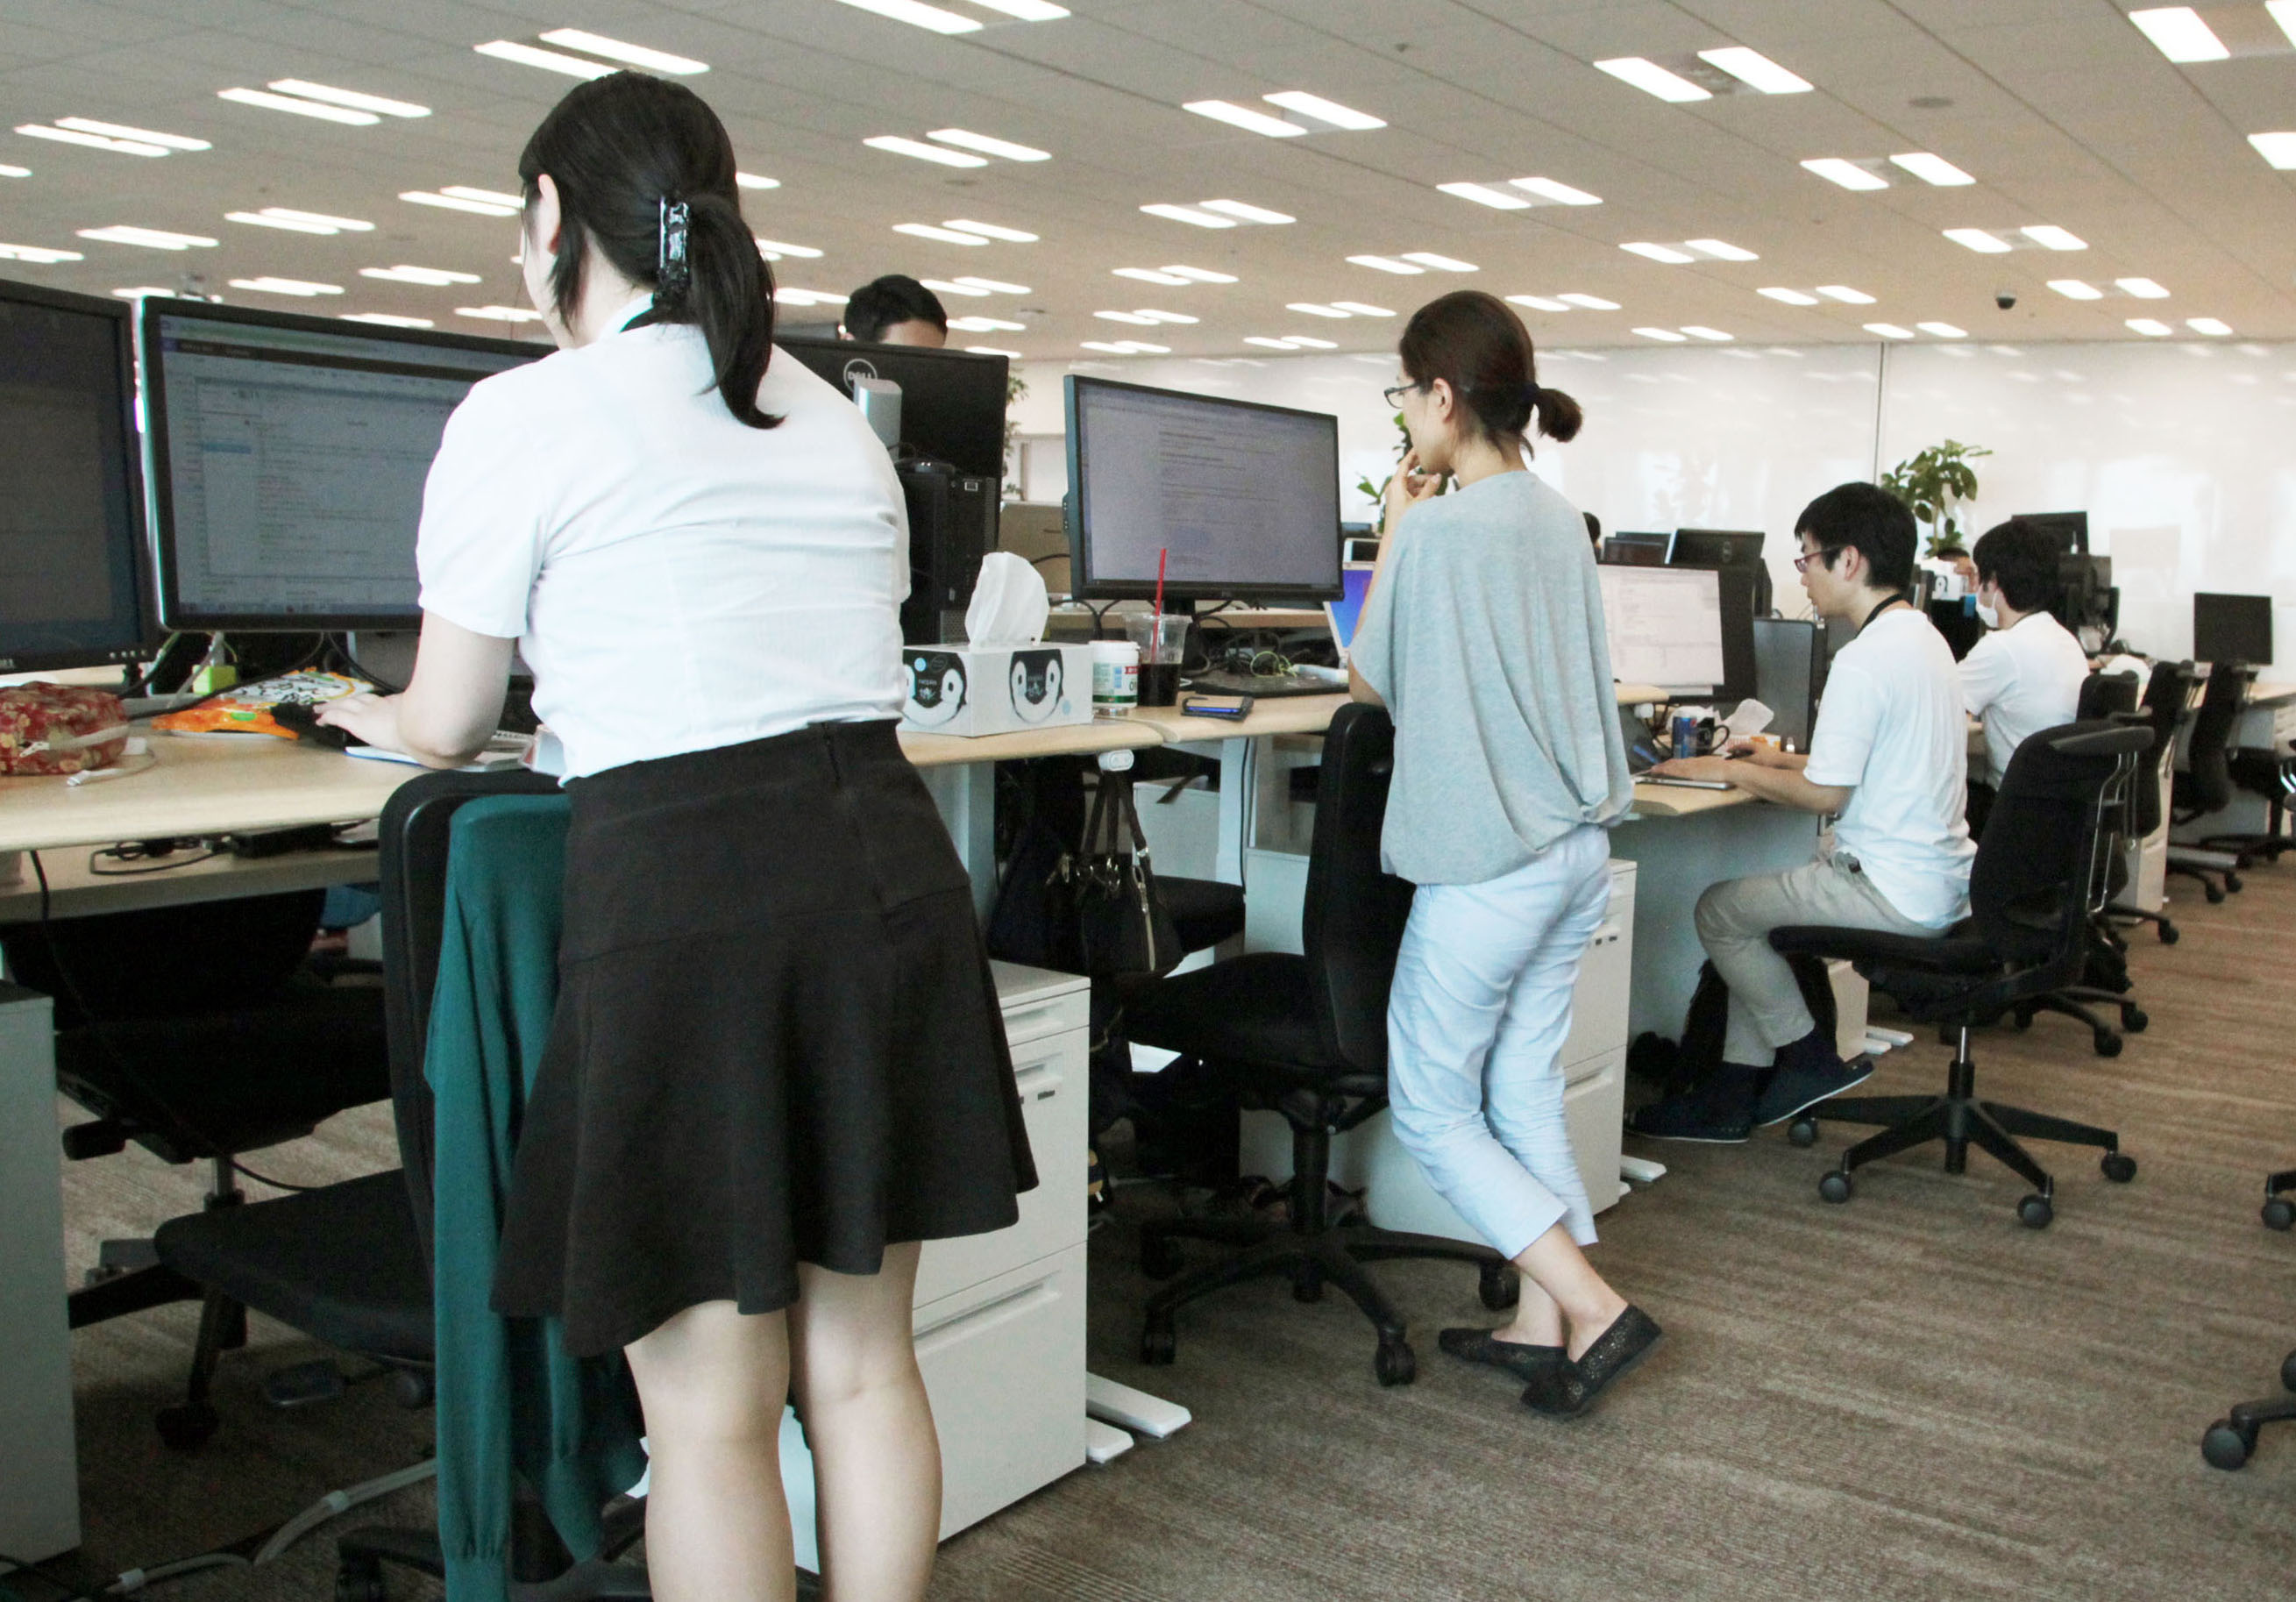 meteoor Samuel pianist Japan Inc. taking steps to get workers to sit less | The Japan Times